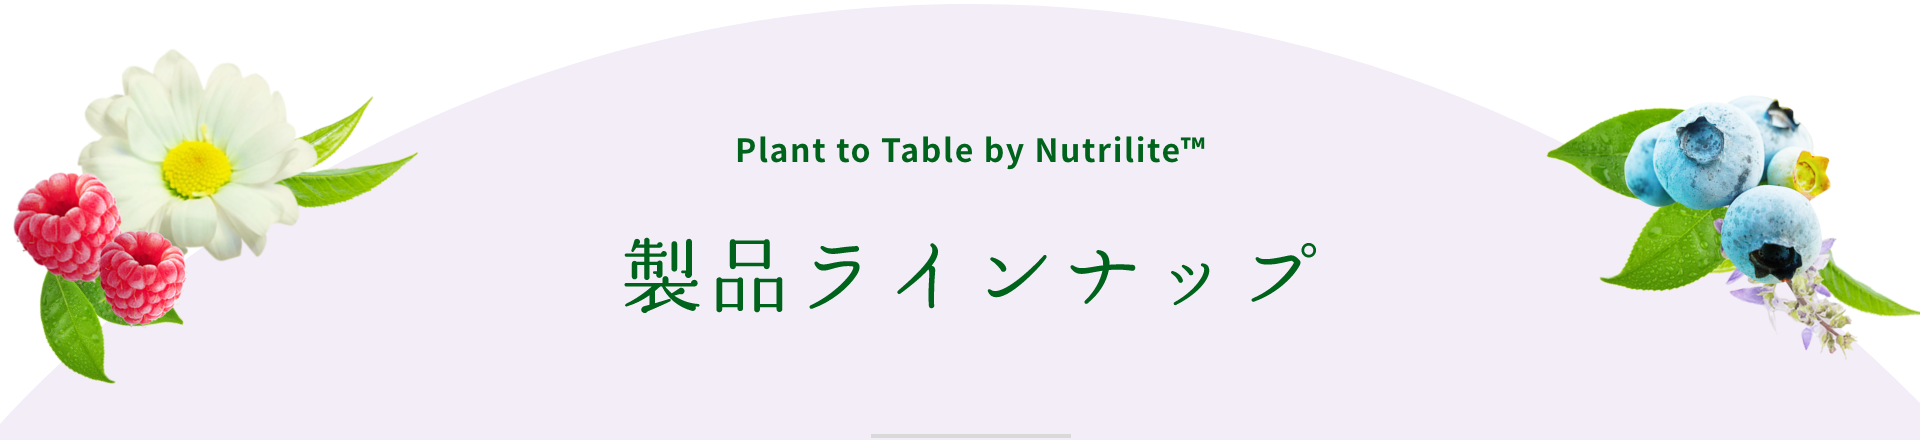 Plant to Table by Nutrilite™ 製品ラインナップ